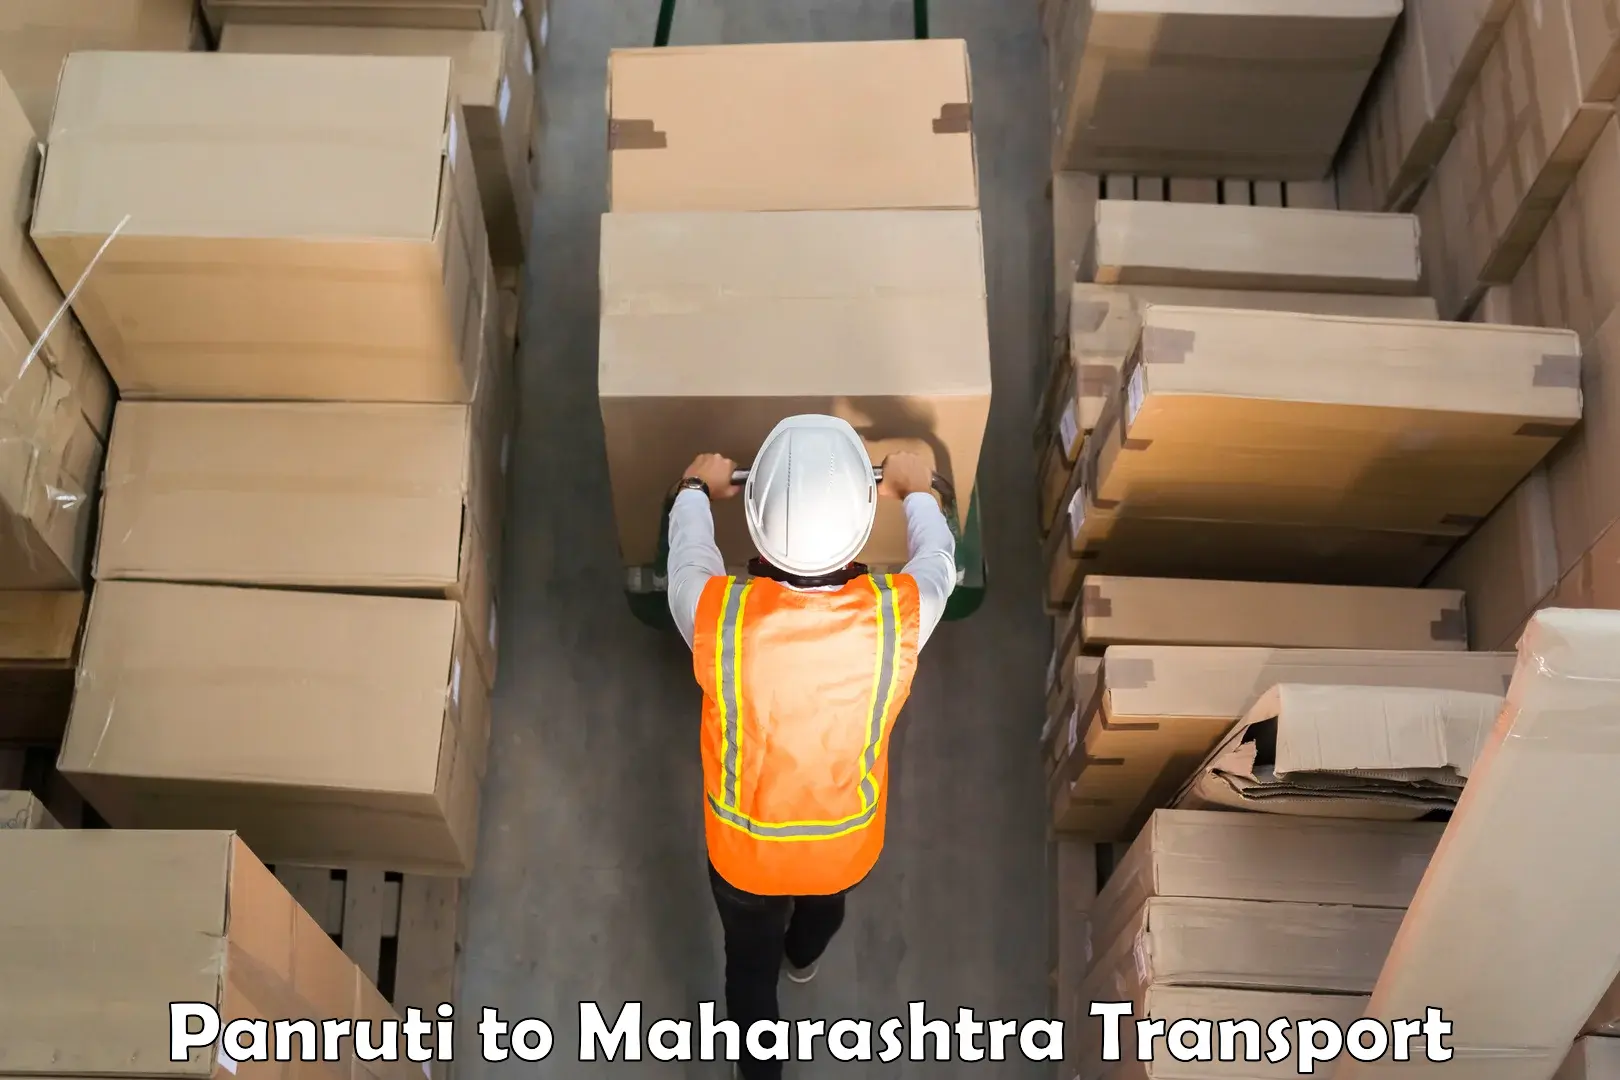 Truck transport companies in India Panruti to Maharashtra